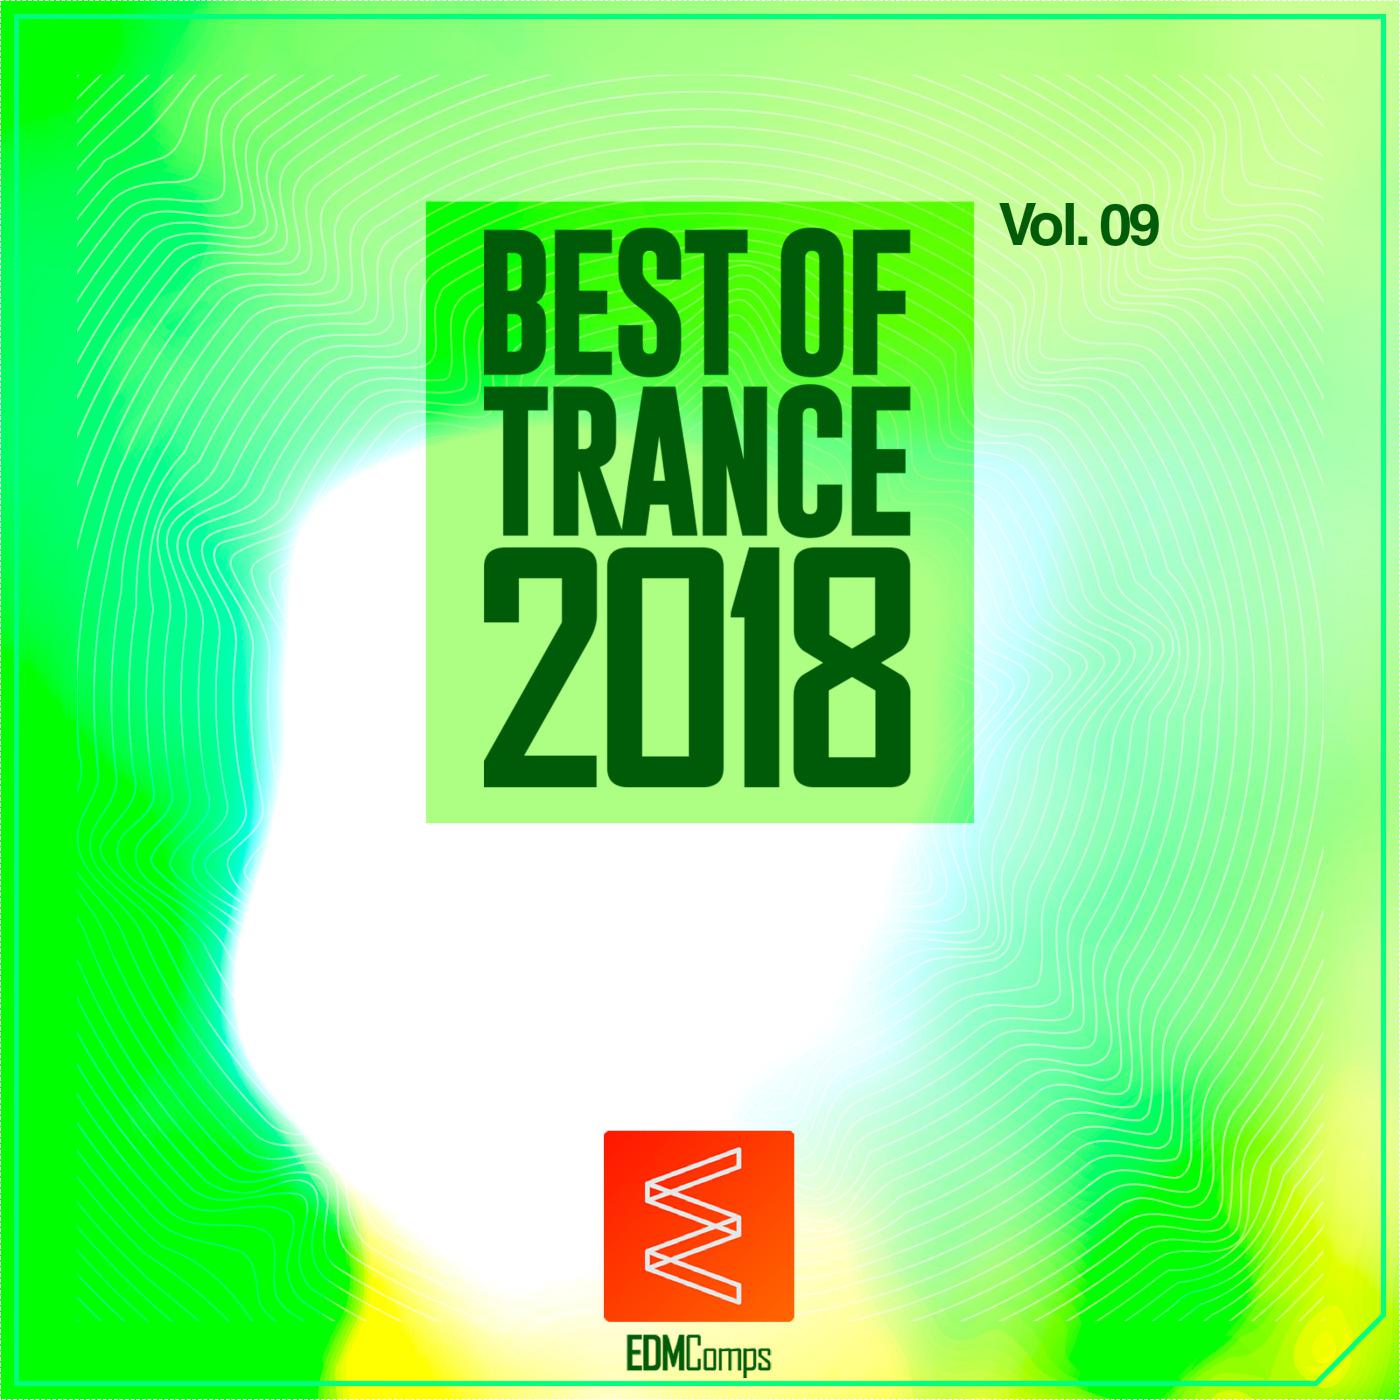 Best of Trance 2018, Vol. 09